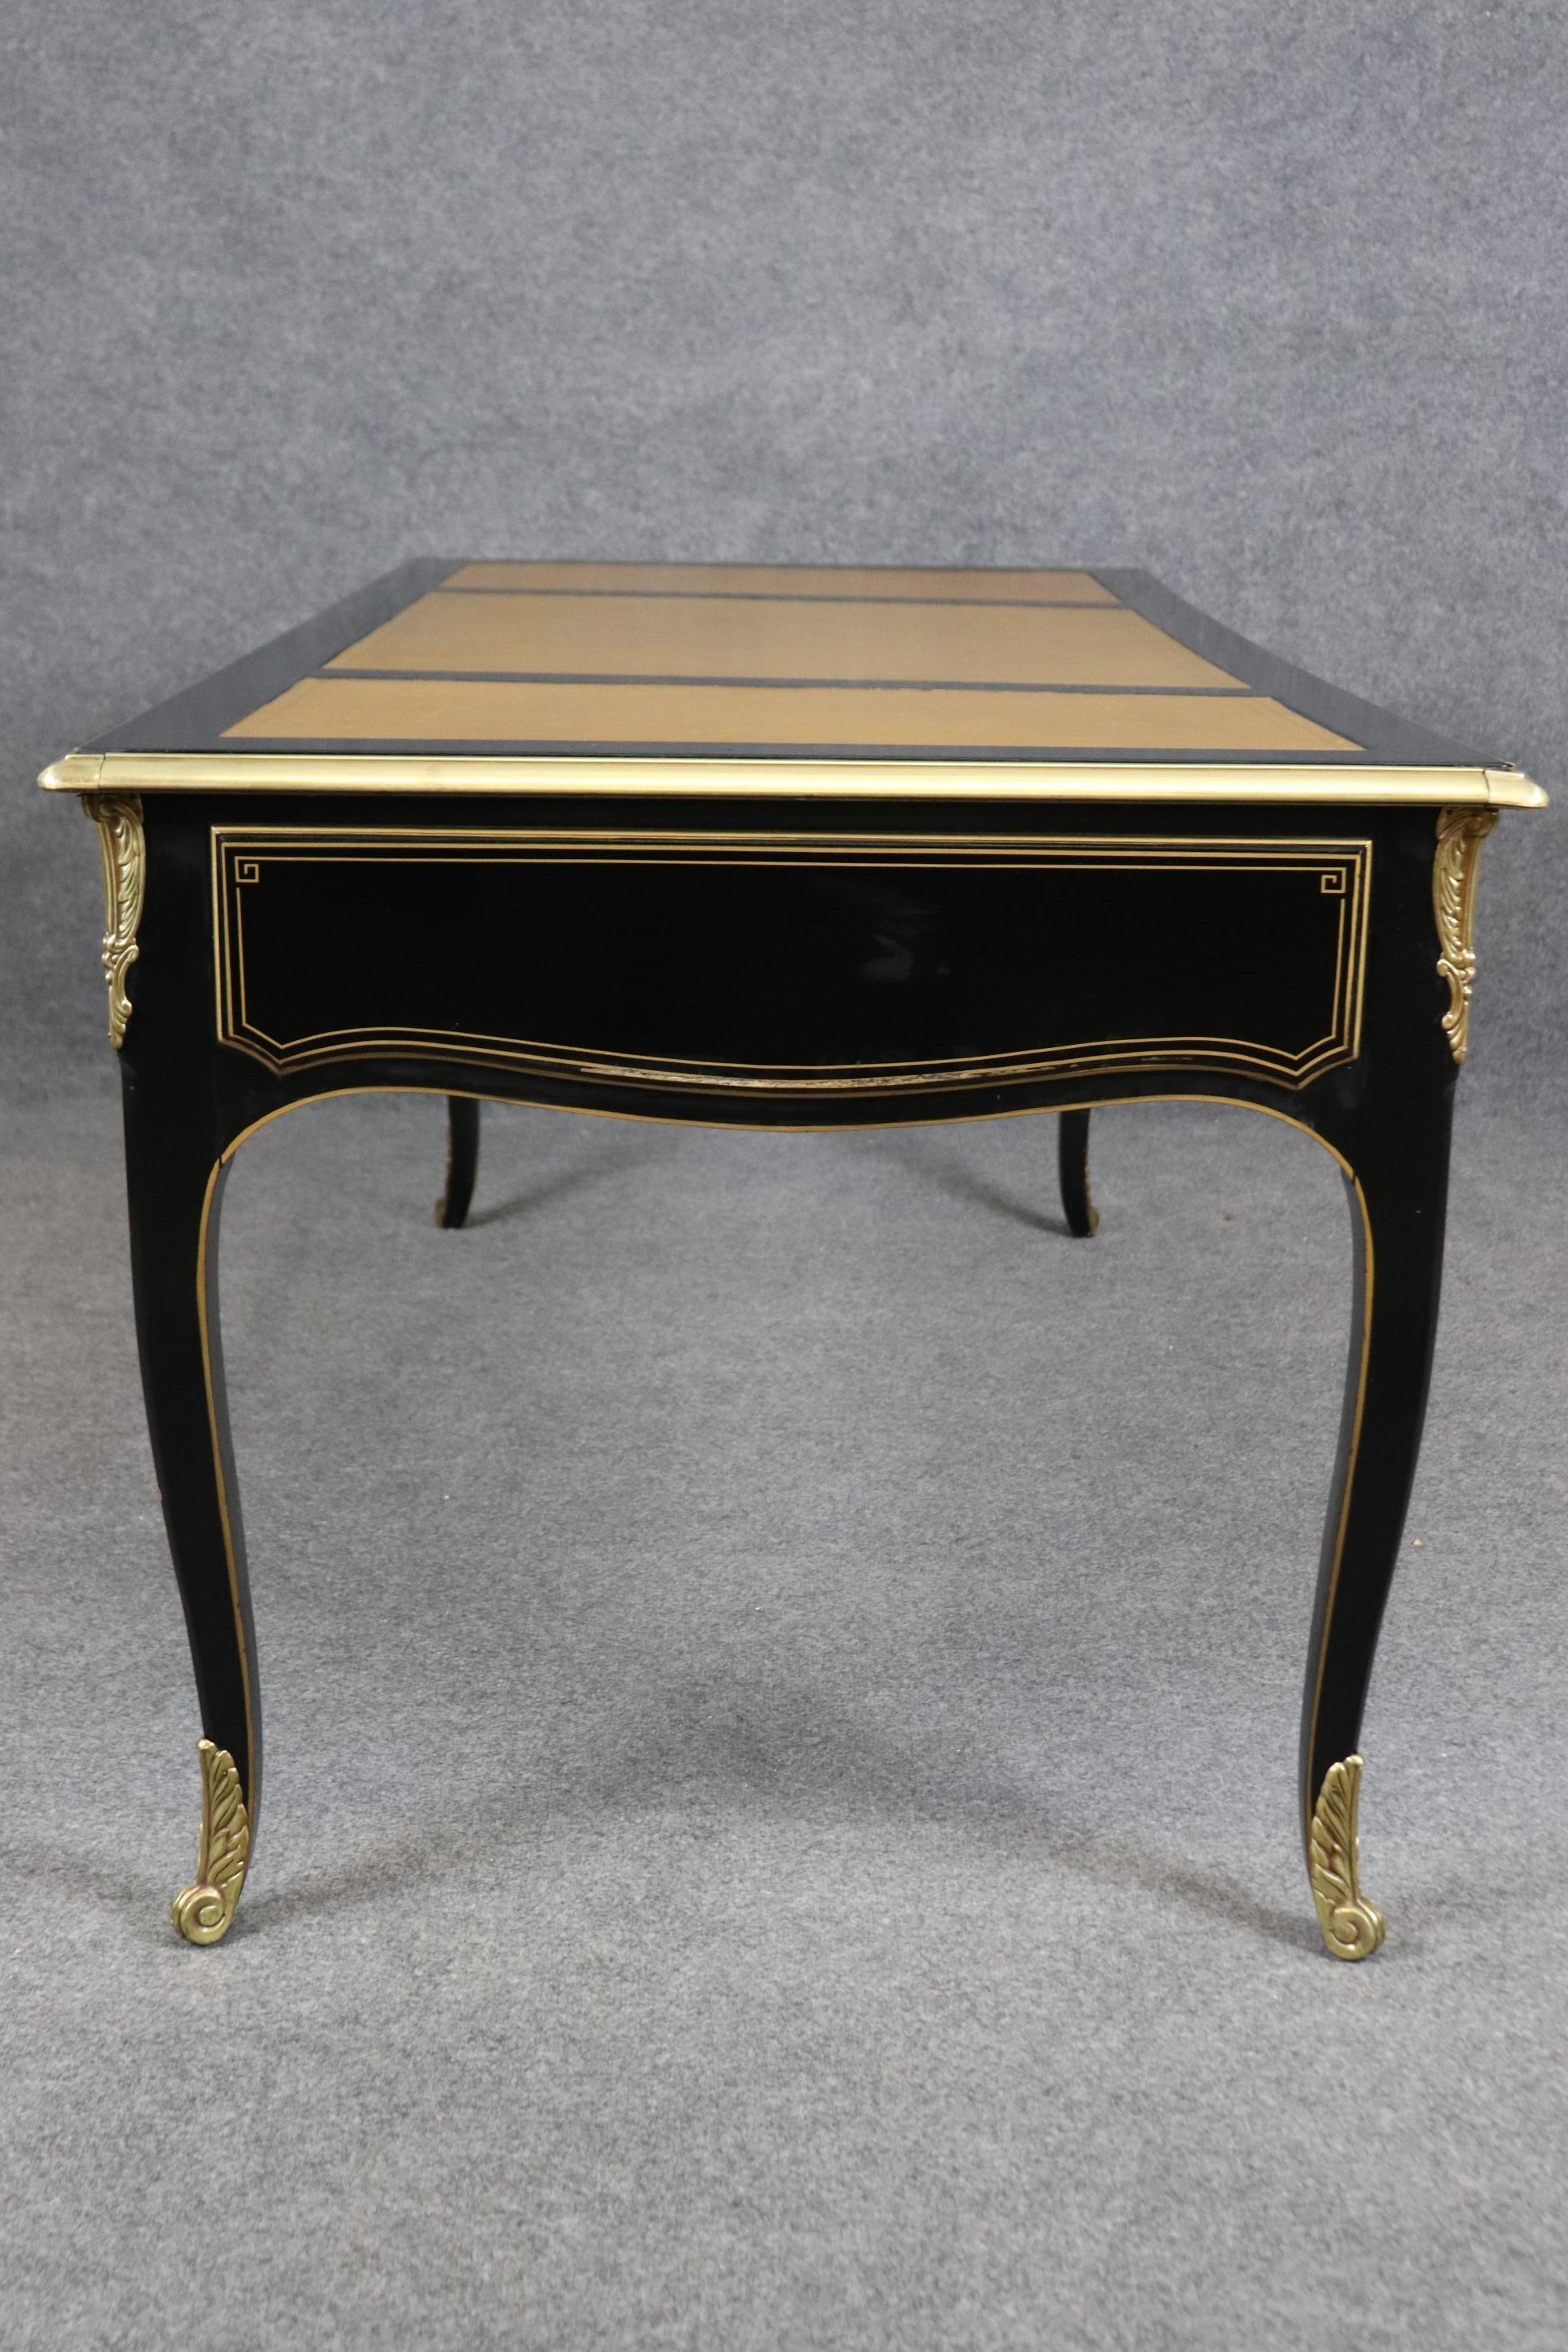 Fine American-Made Leather Top Brass Ormolu Louis XV Style Bureau Plat Desk  In Good Condition For Sale In Swedesboro, NJ